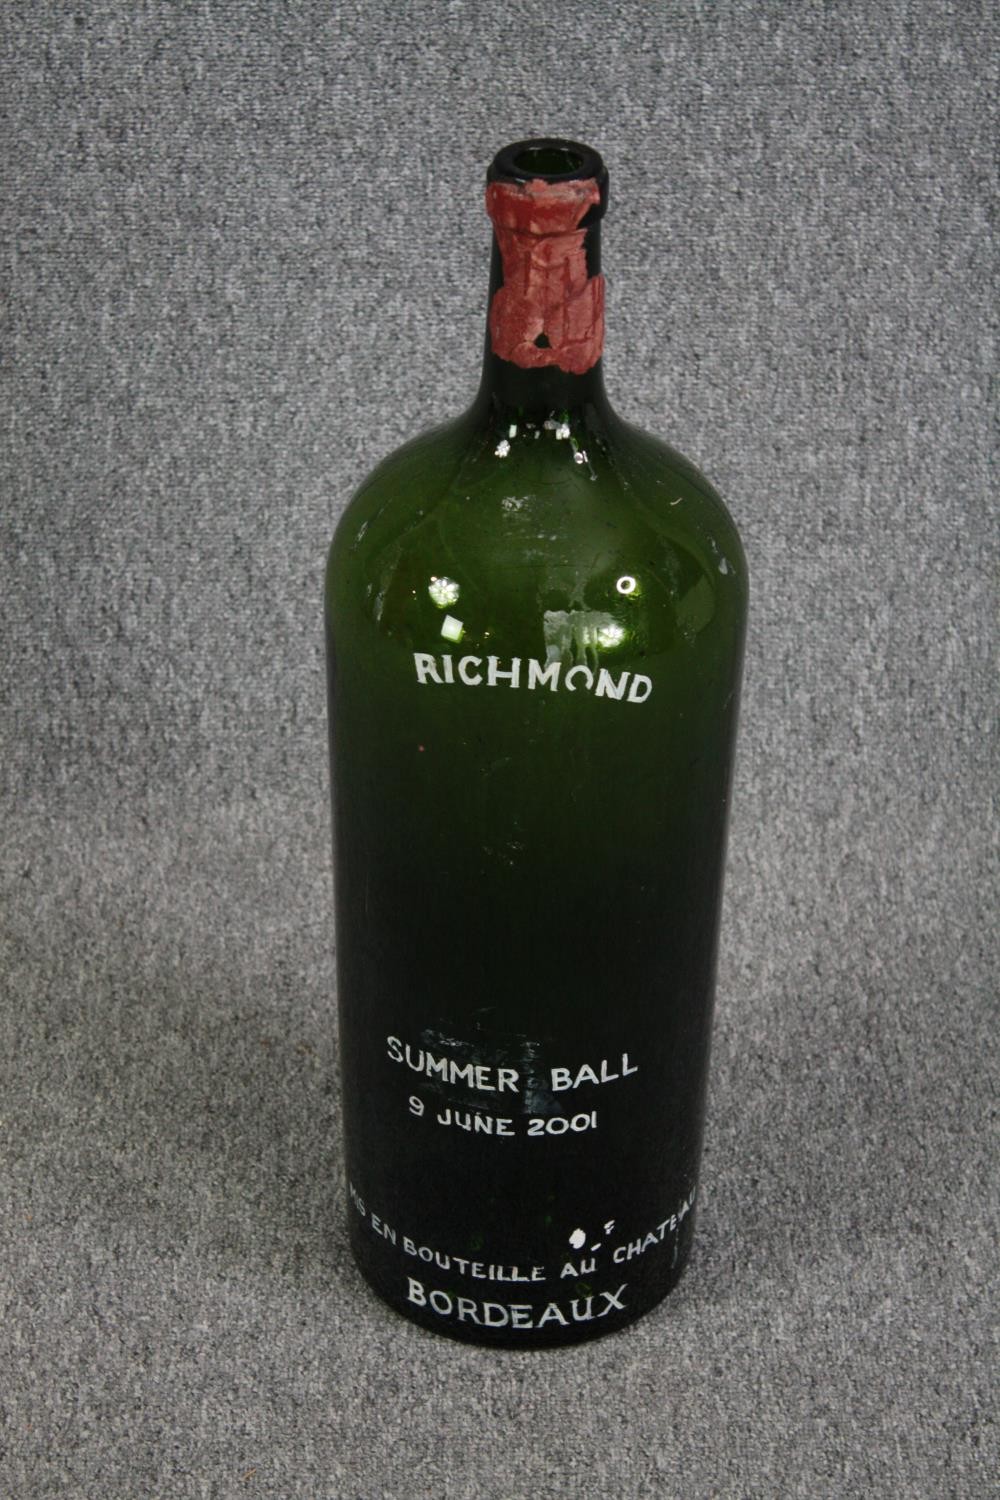 A large oversized wine bottle. Bouteille chateau, Bordeaux. Richmond Summer Ball 2001. H.63cm. - Image 2 of 3